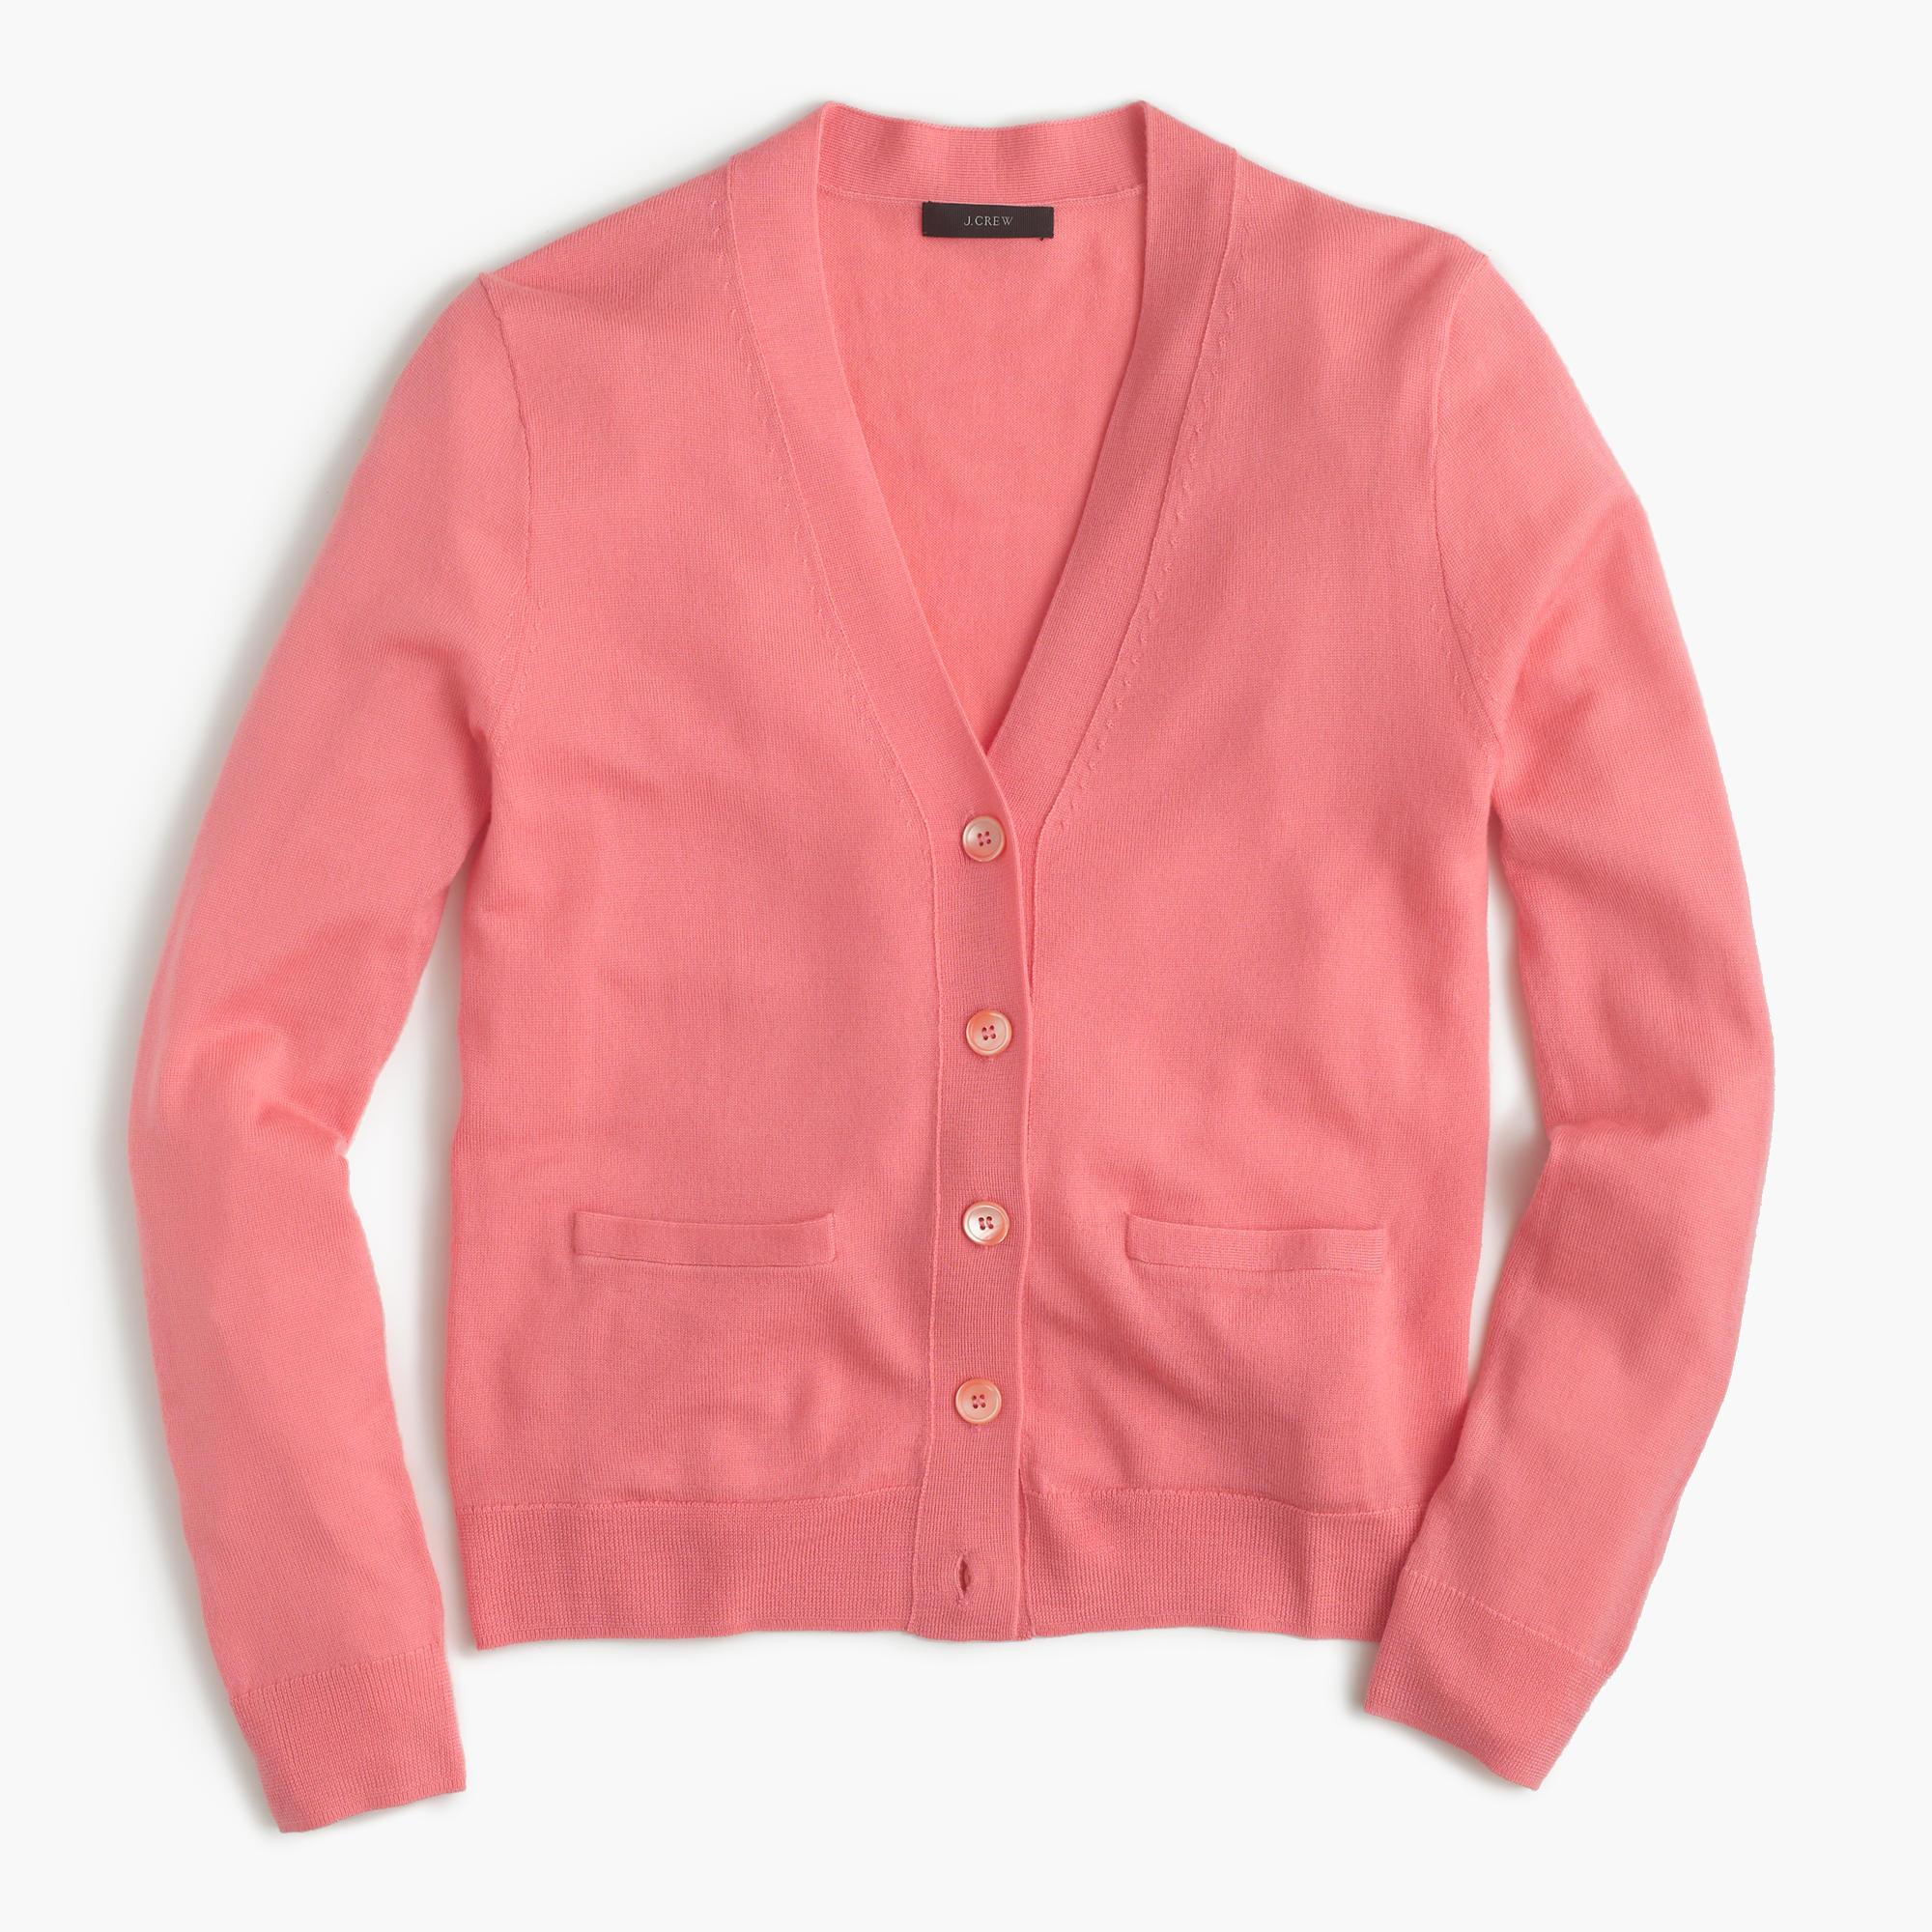 J.Crew V-neck Cardigan Sweater In Merino Wool in Vivid Coral (Pink) - Lyst